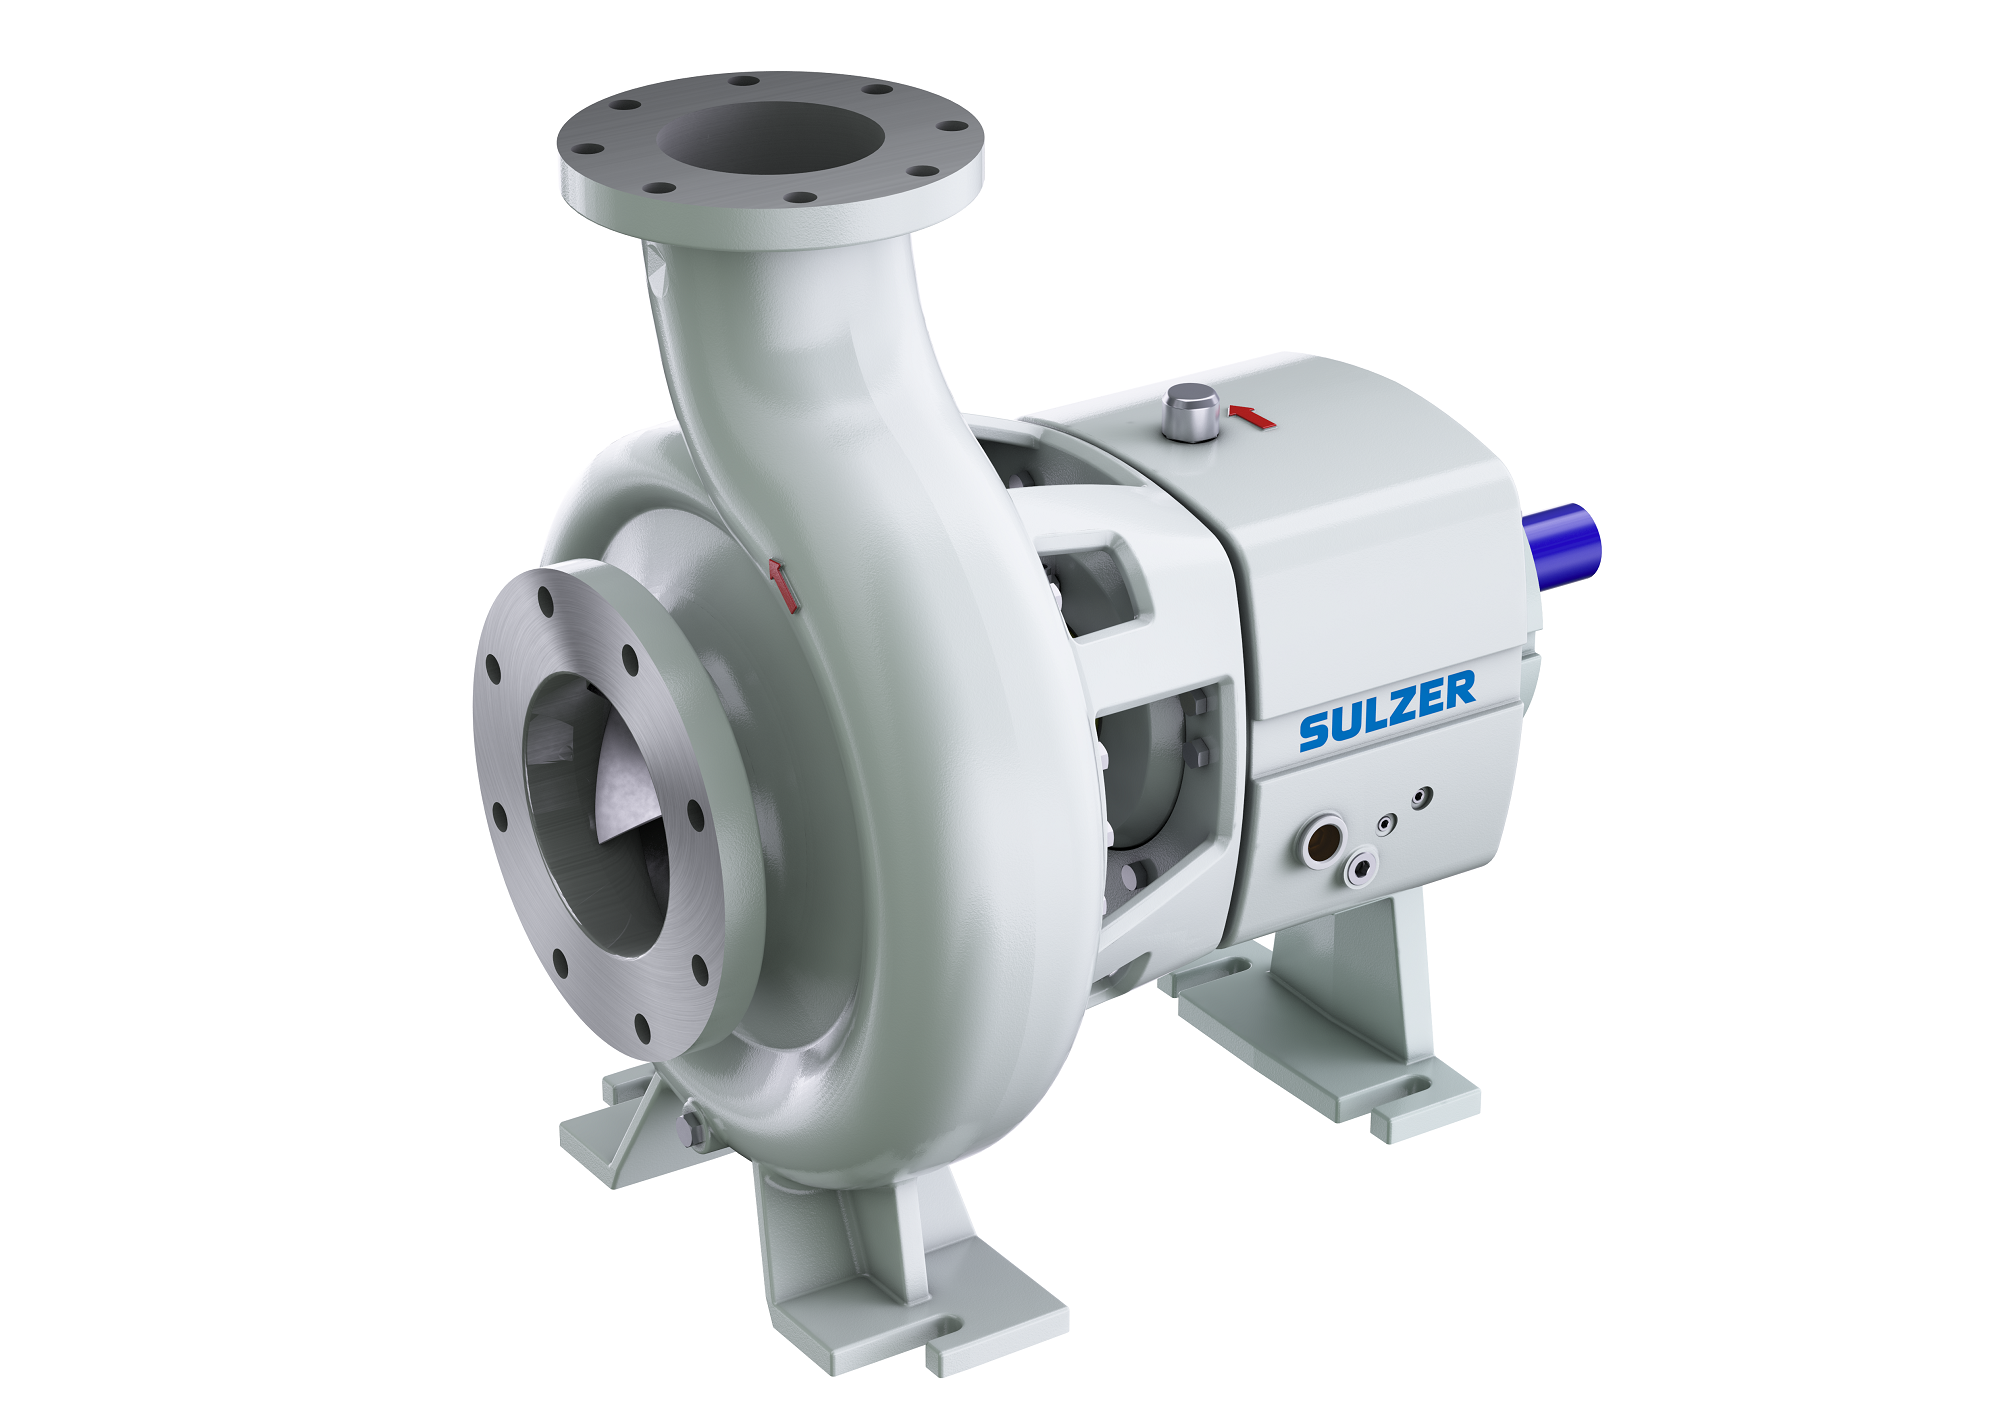 Sulzer’s new CPE ANSI process pump.